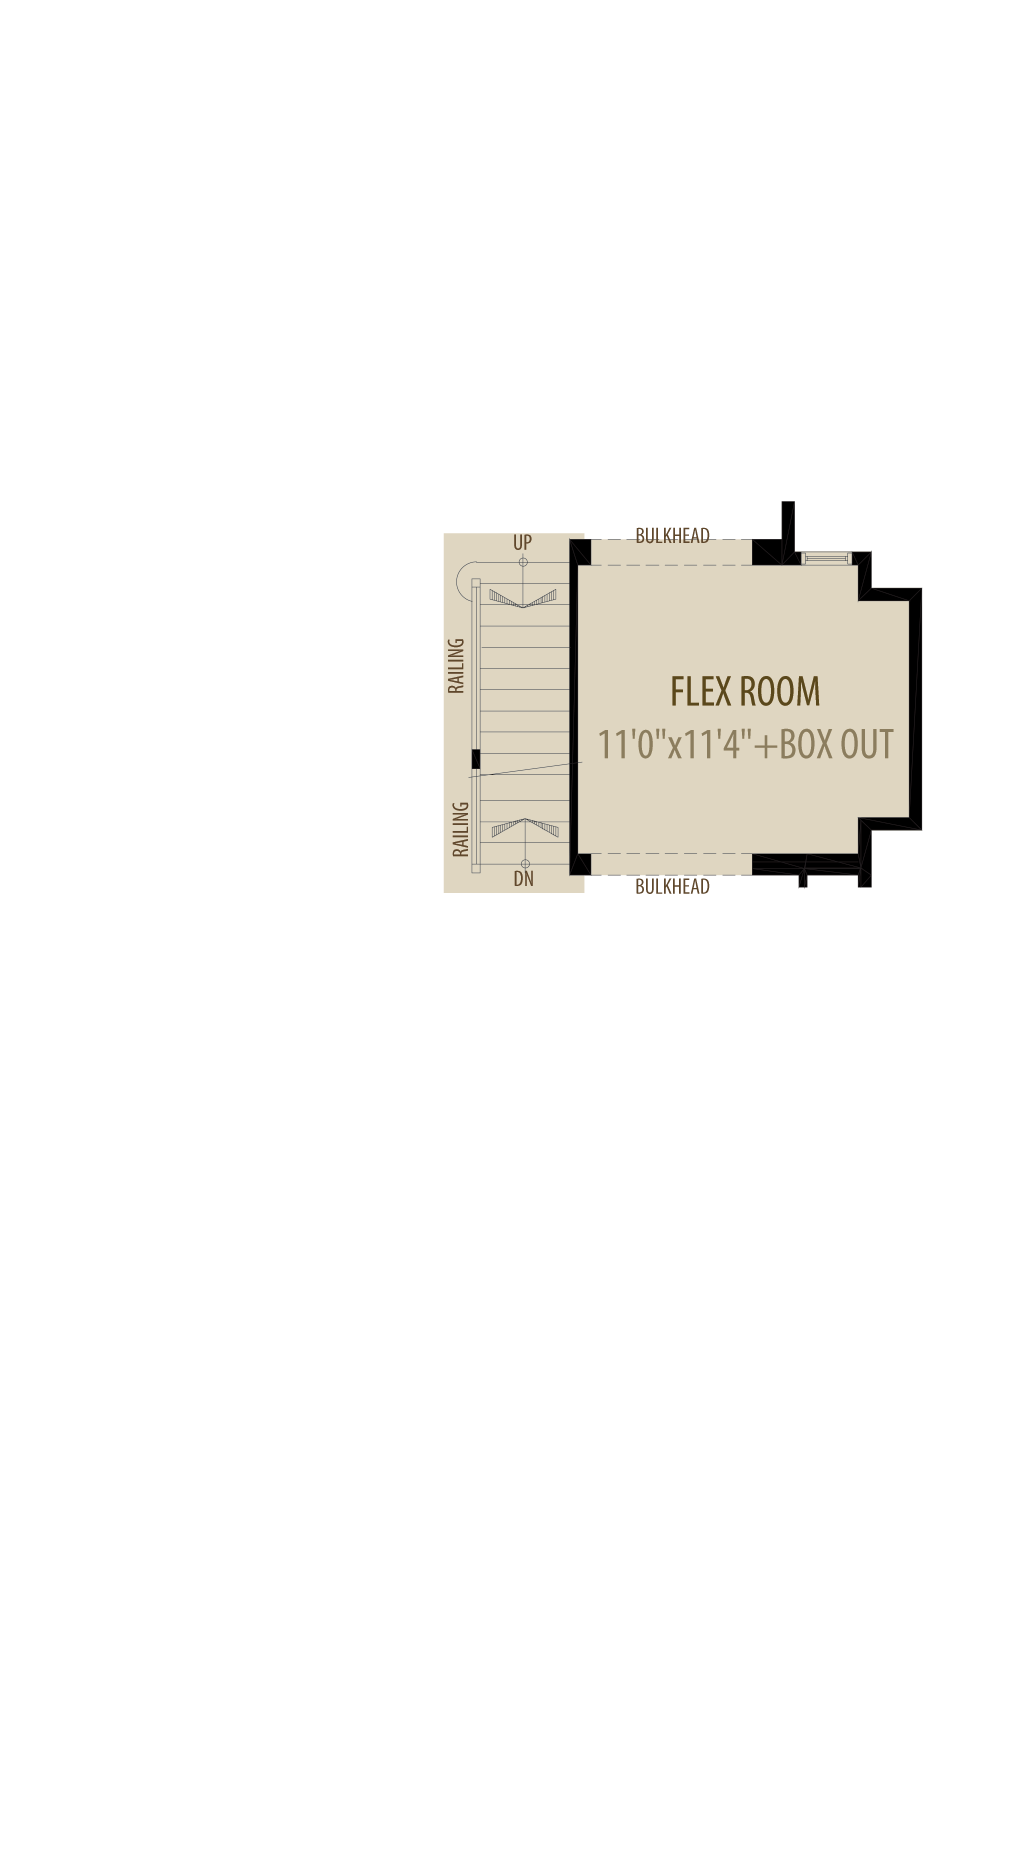 Flex Room Cantilever Adds 19Sq Ft